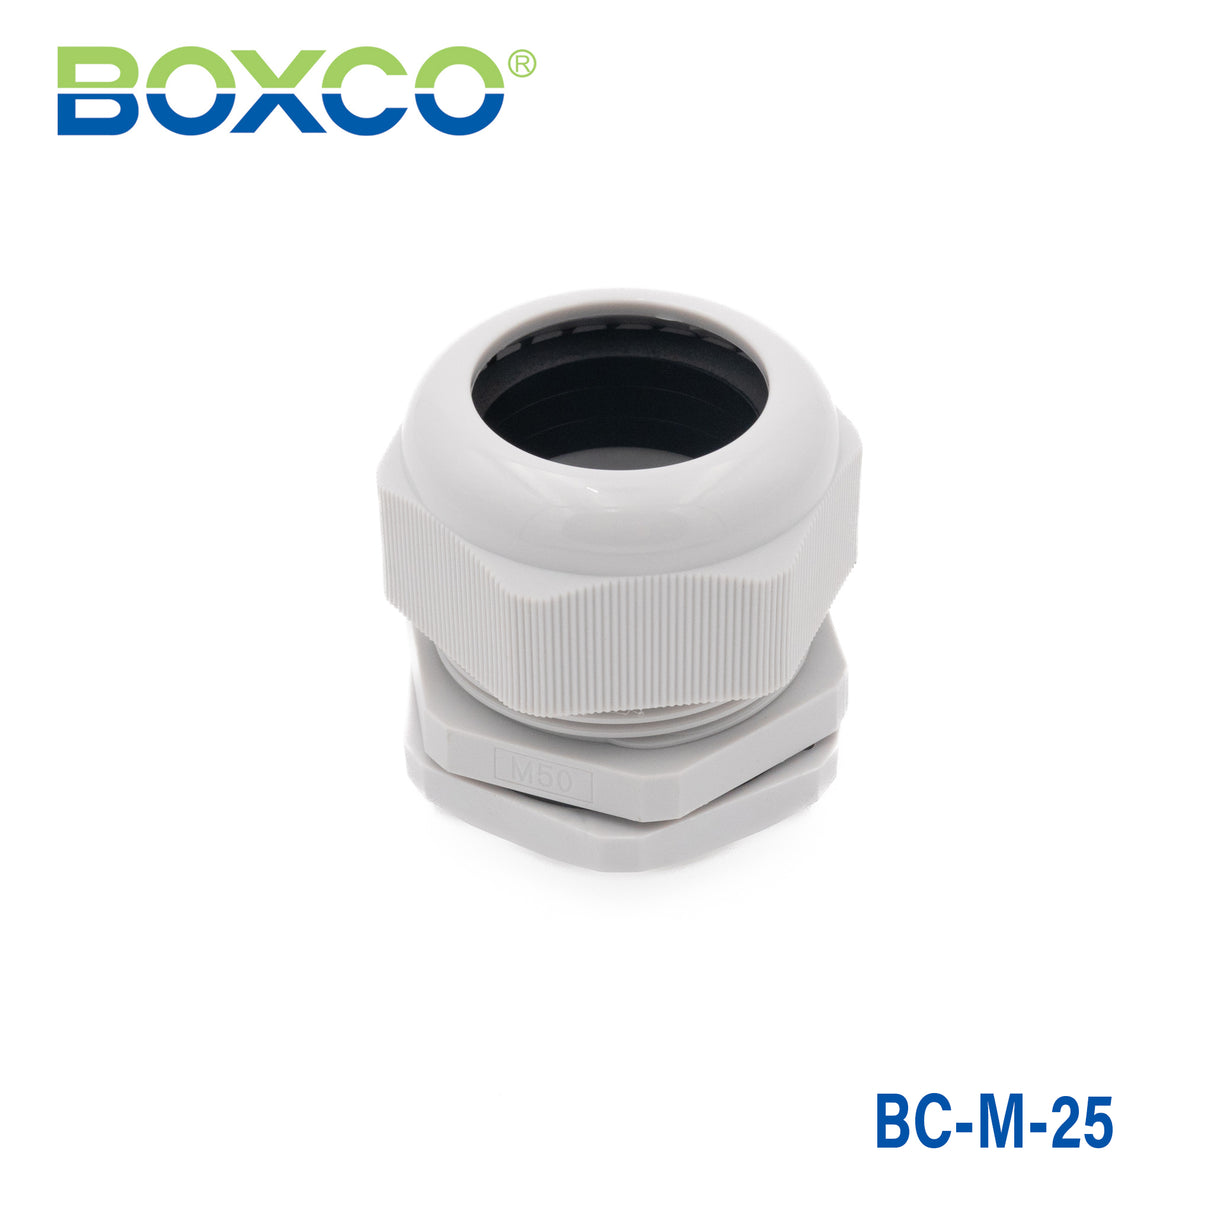 Boxco Plastic Cable Gland 13~18mm Cable Range BC-M-25